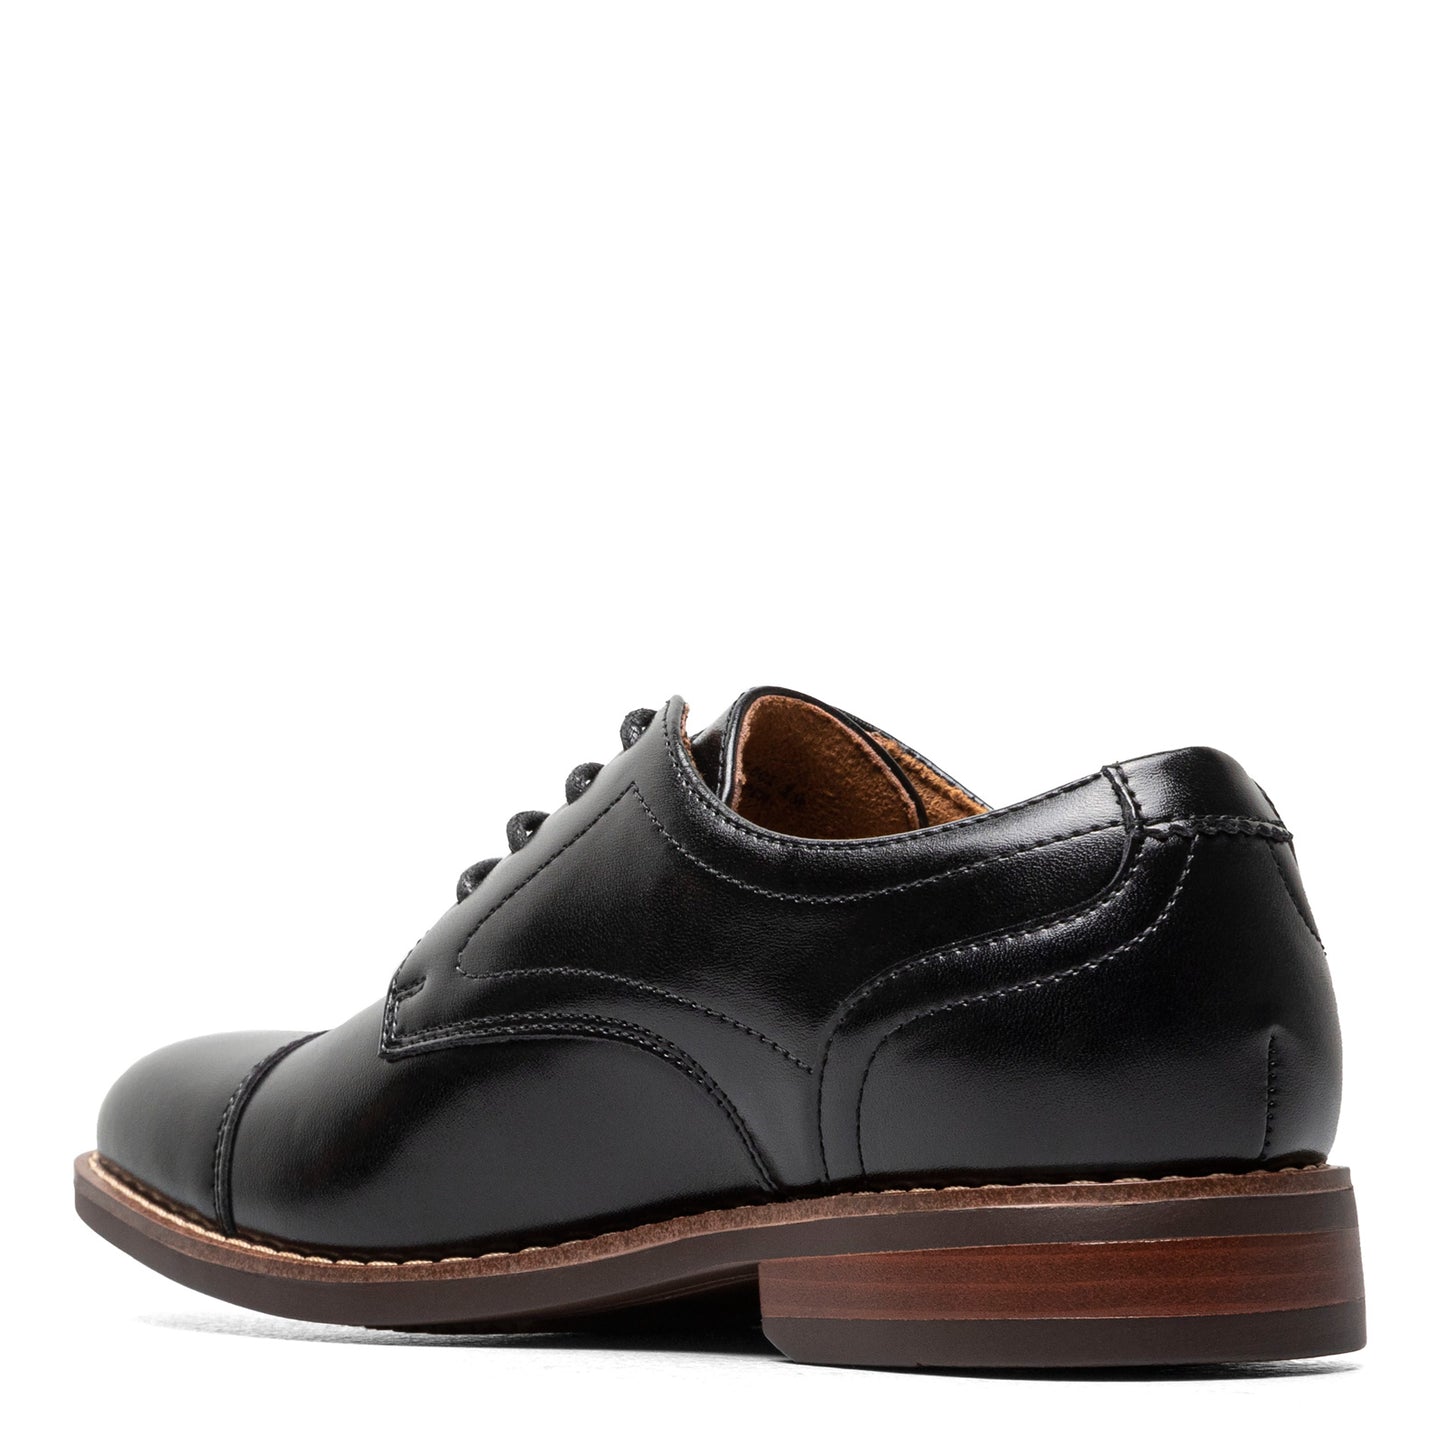 Peltz Shoes  Boy's Florsheim Rucci JR Cap Toe Oxford – Little Kid & Big Kid Black 16687-001